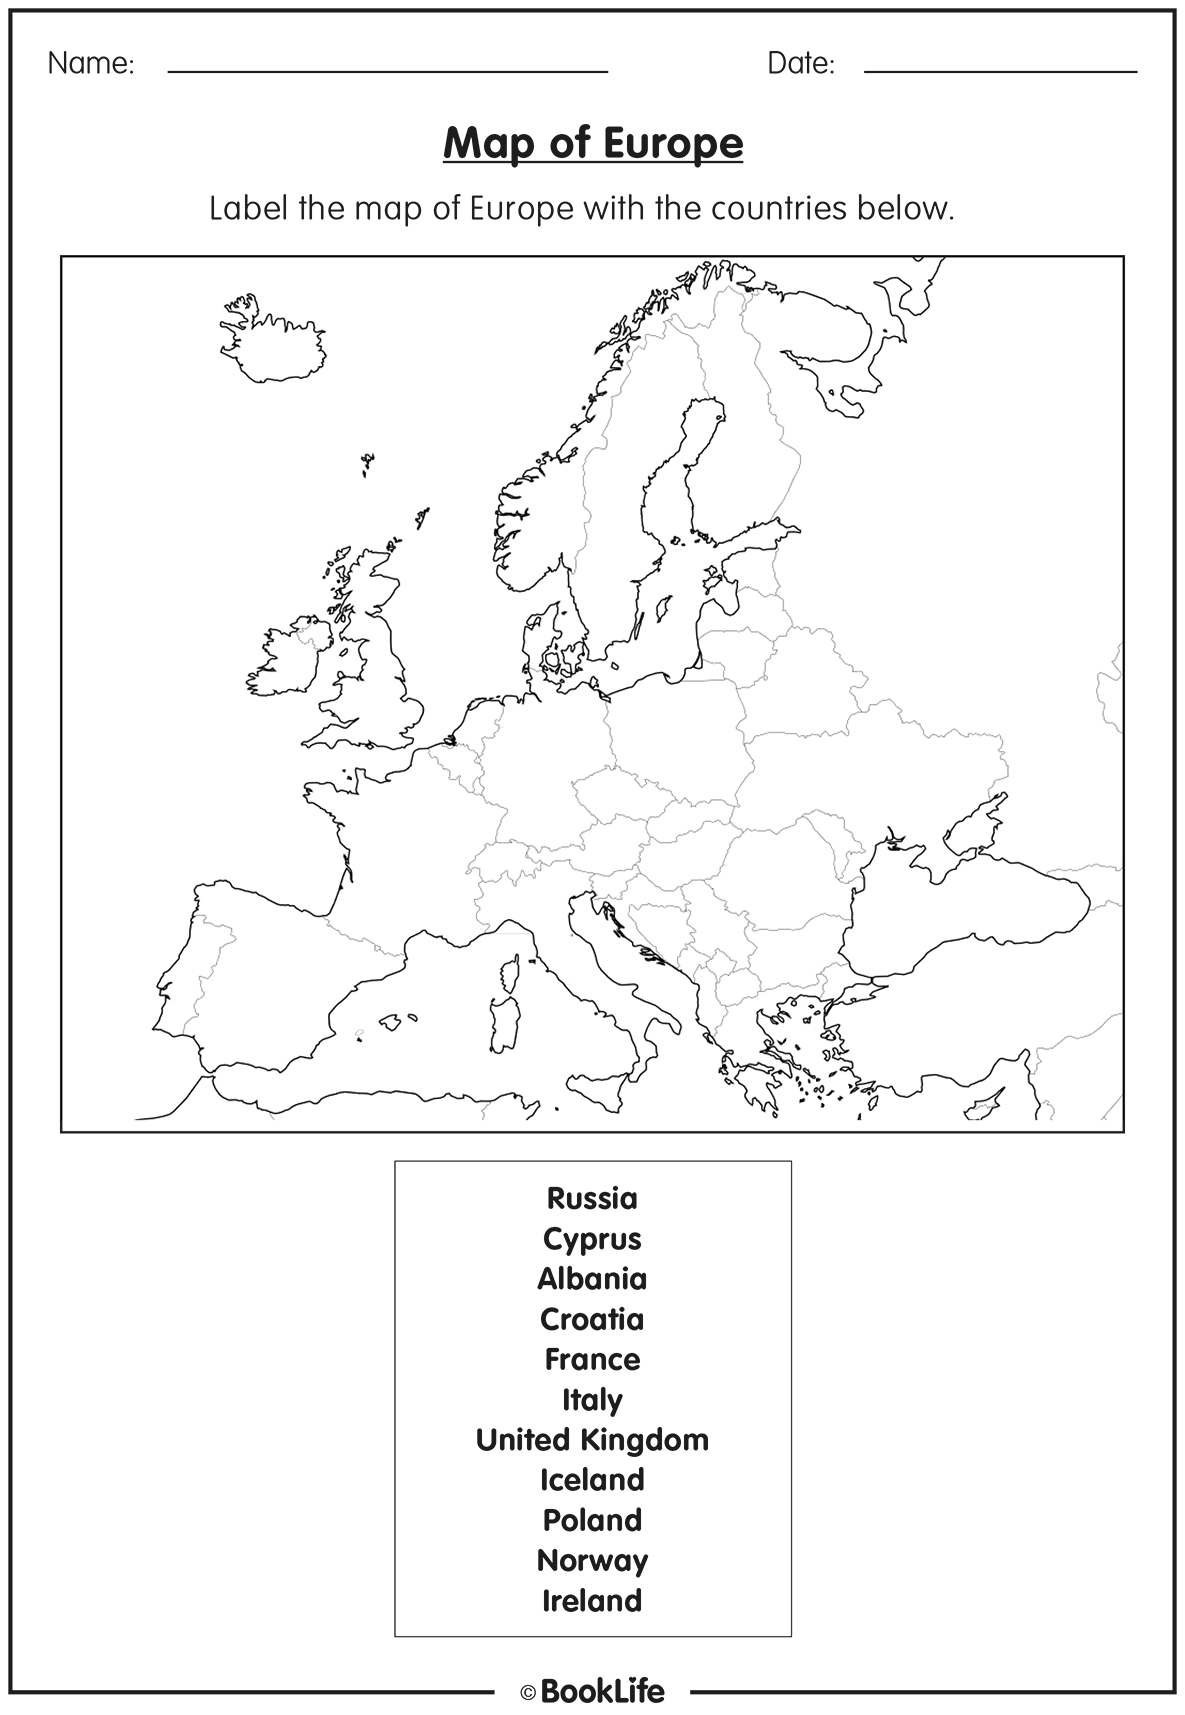 free-activity-sheet-map-of-europe